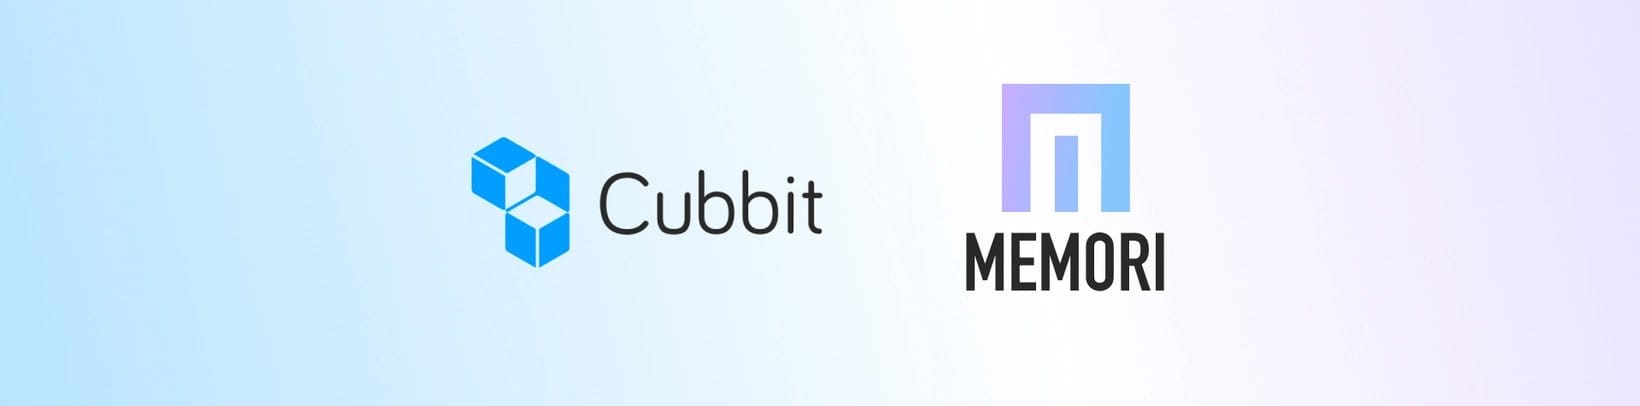 Memori joined Cubbit's "Next Generation Cloud Pioneers" network